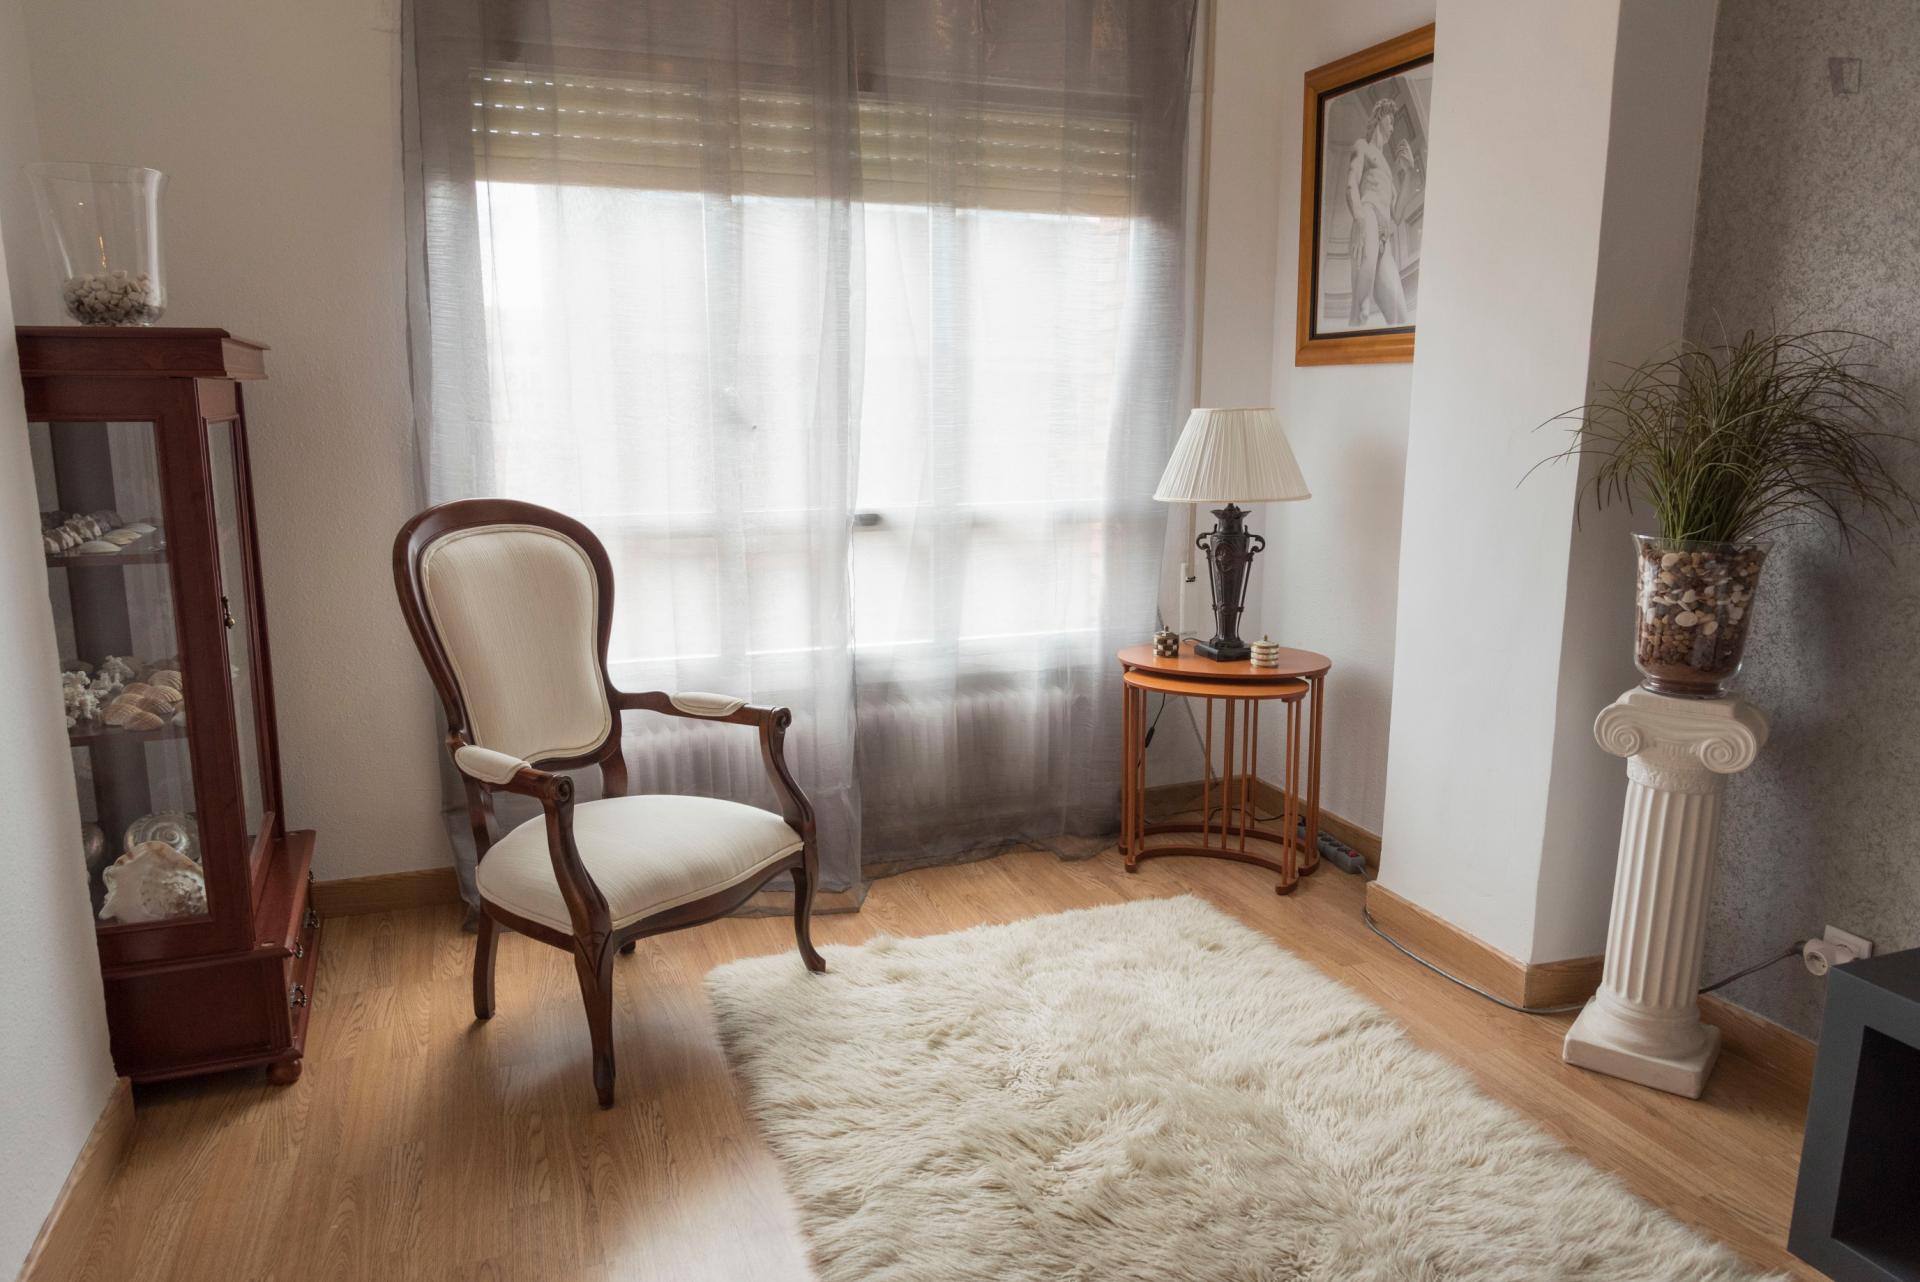 Galileo - One bedroom apartment in Madrid